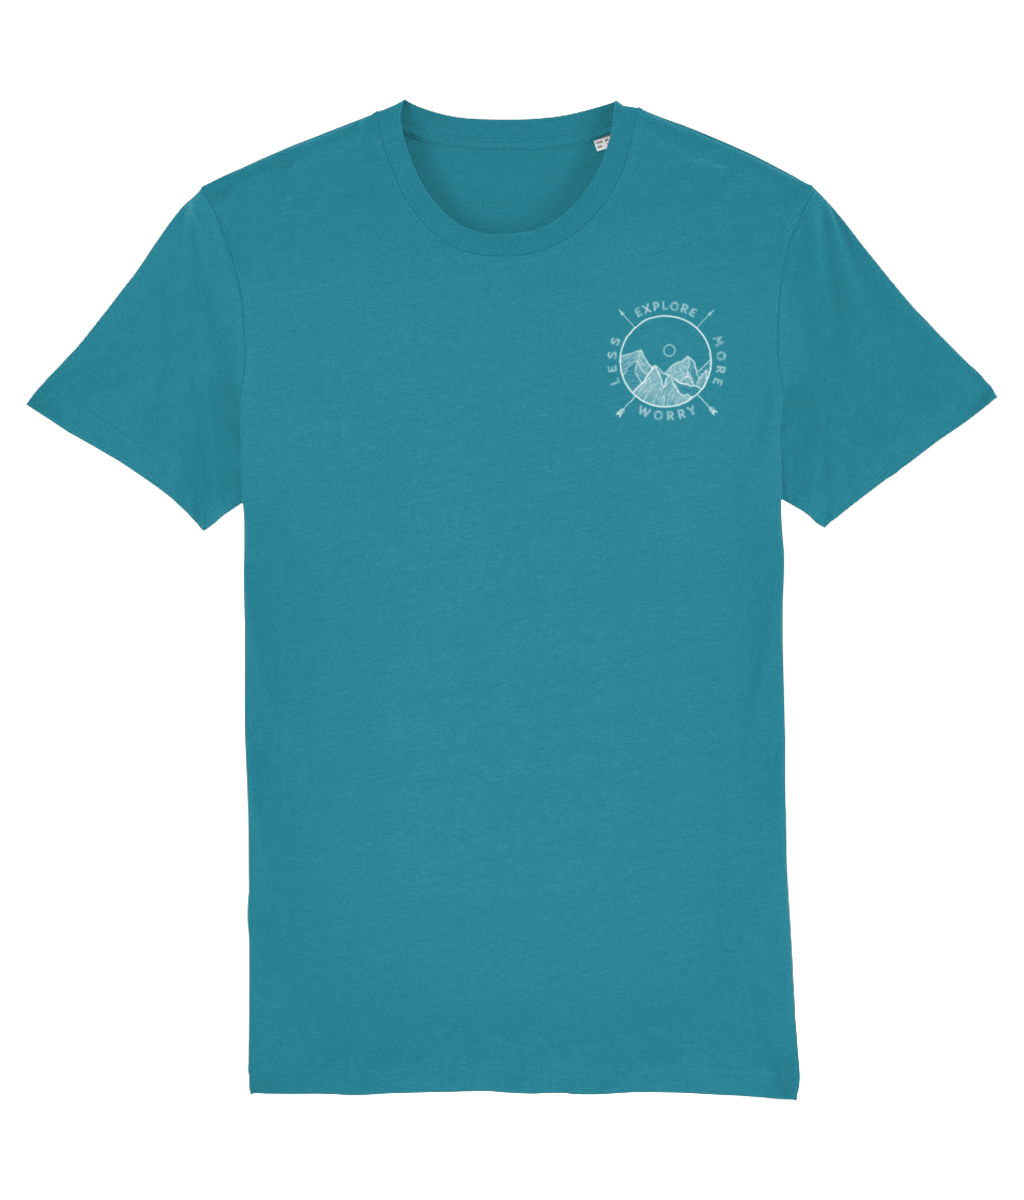 Explore More Worry Less Unisex Organic Cotton T-shirt